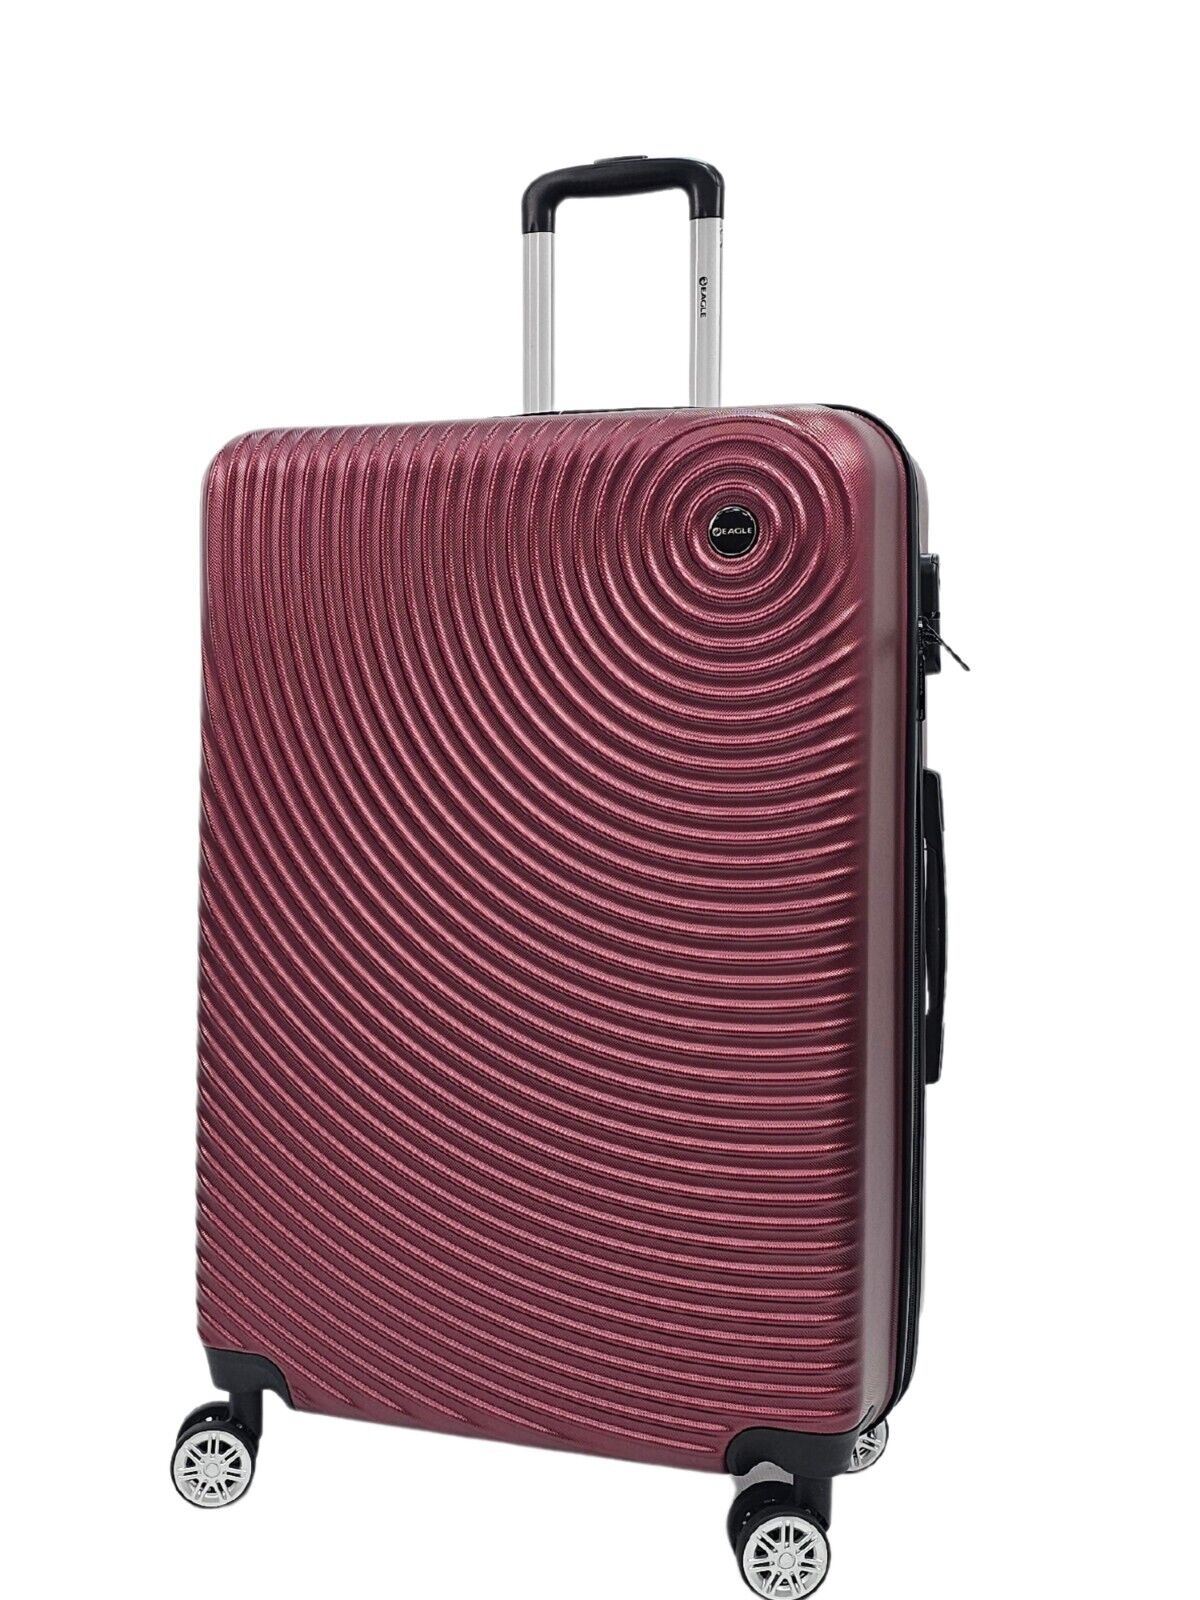 Hard Shell Burgundy Cabin Suitcase Set 8 Wheel Luggage Case Travel Bag